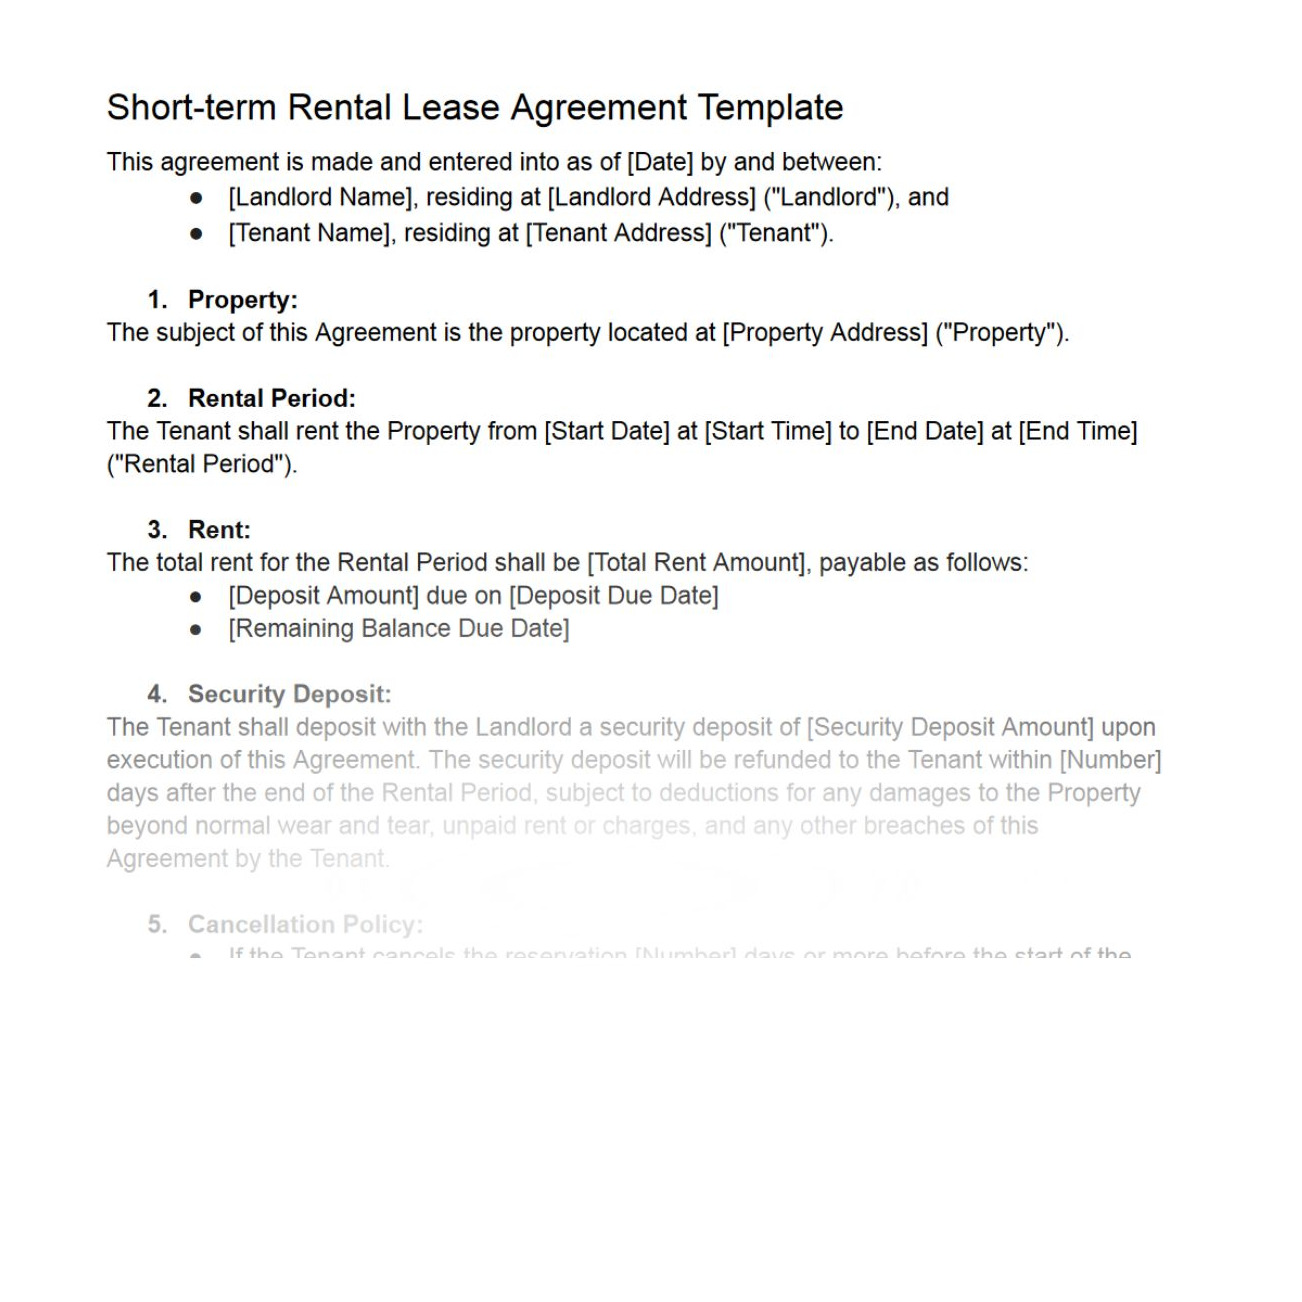 Short-term Rental Lease Agreement Template